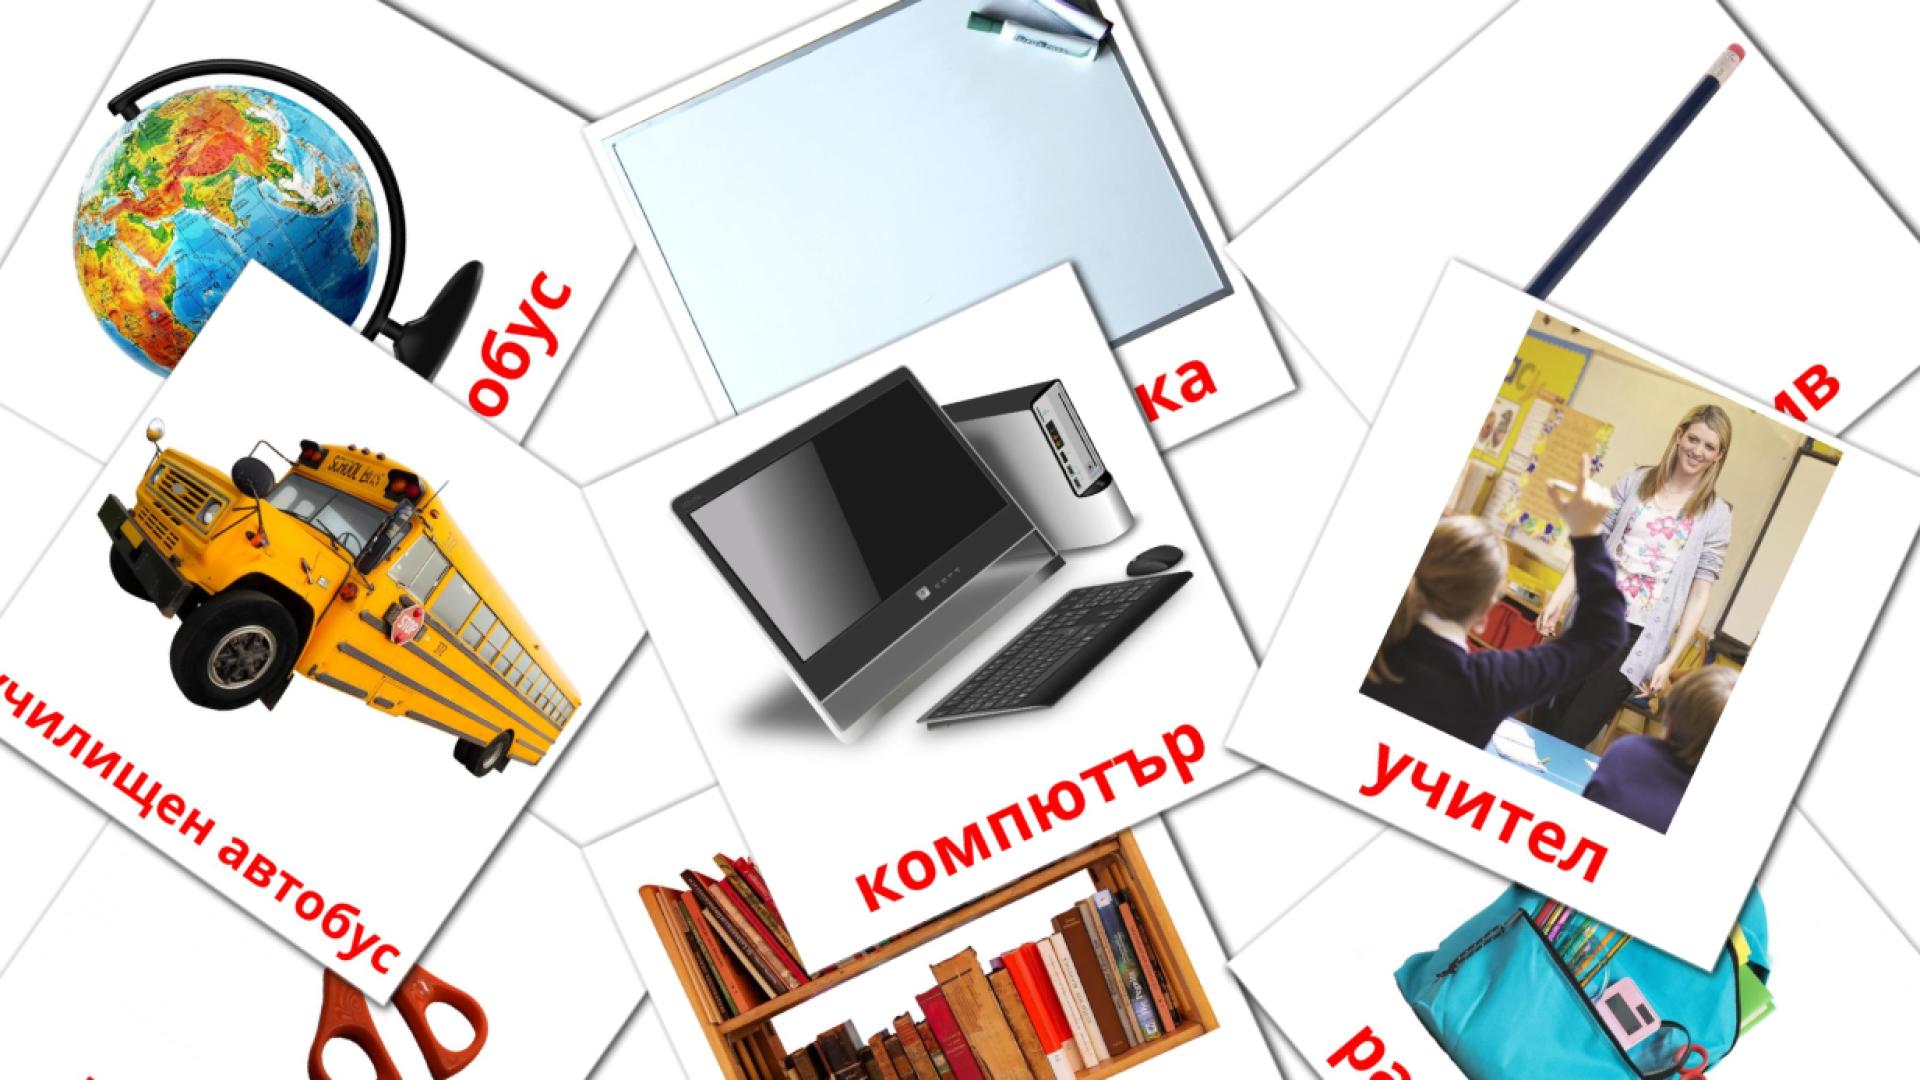 Classroom objects - bulgarian vocabulary cards